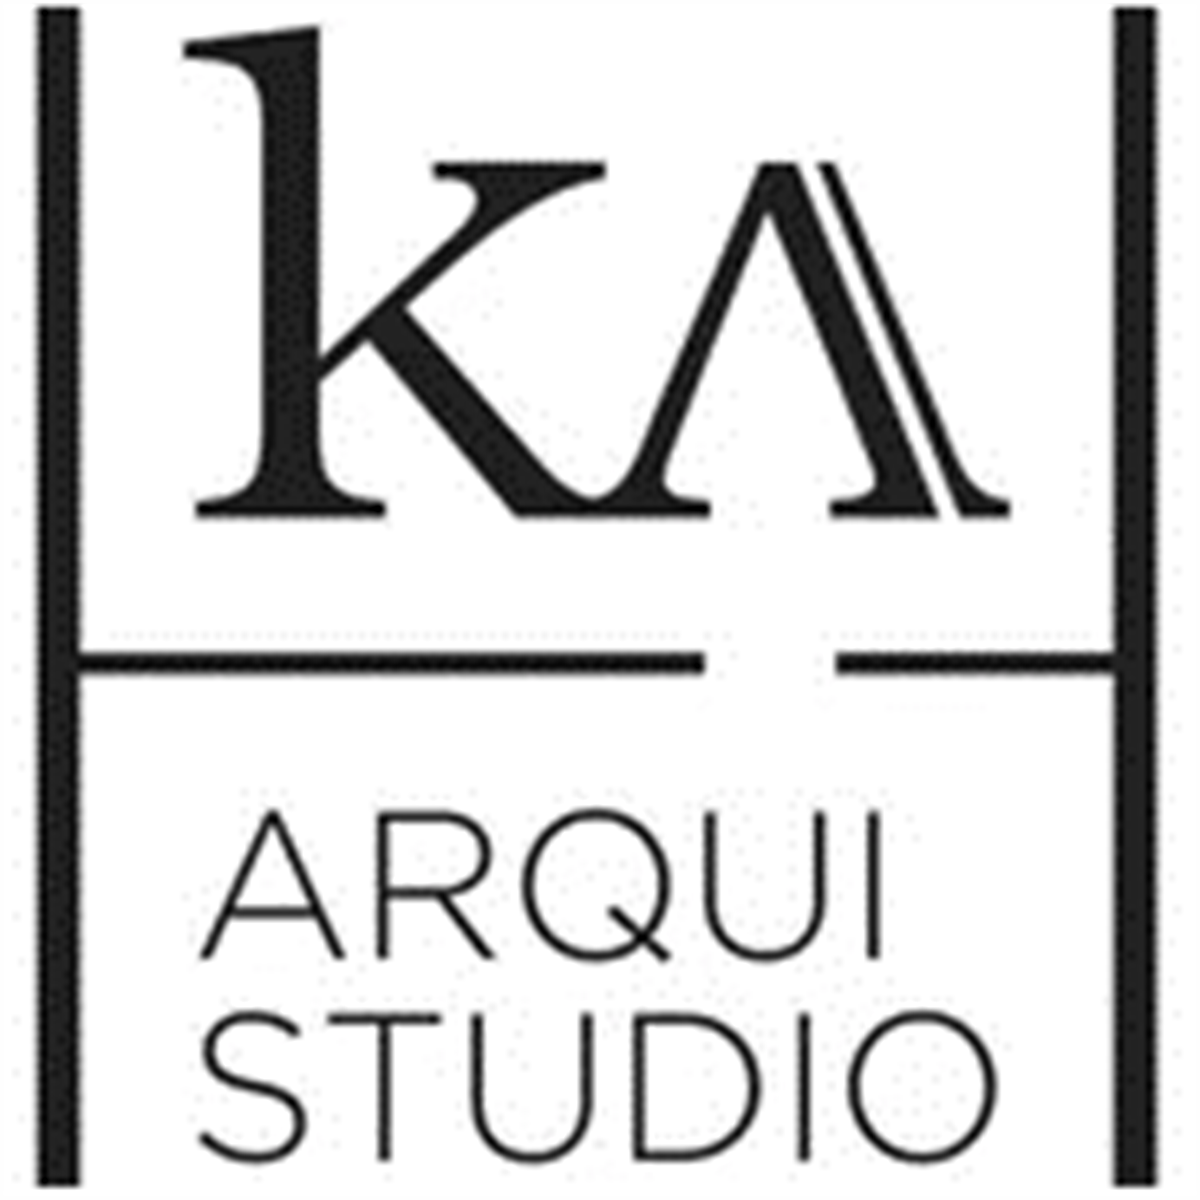 KA ARQUI STUDIO